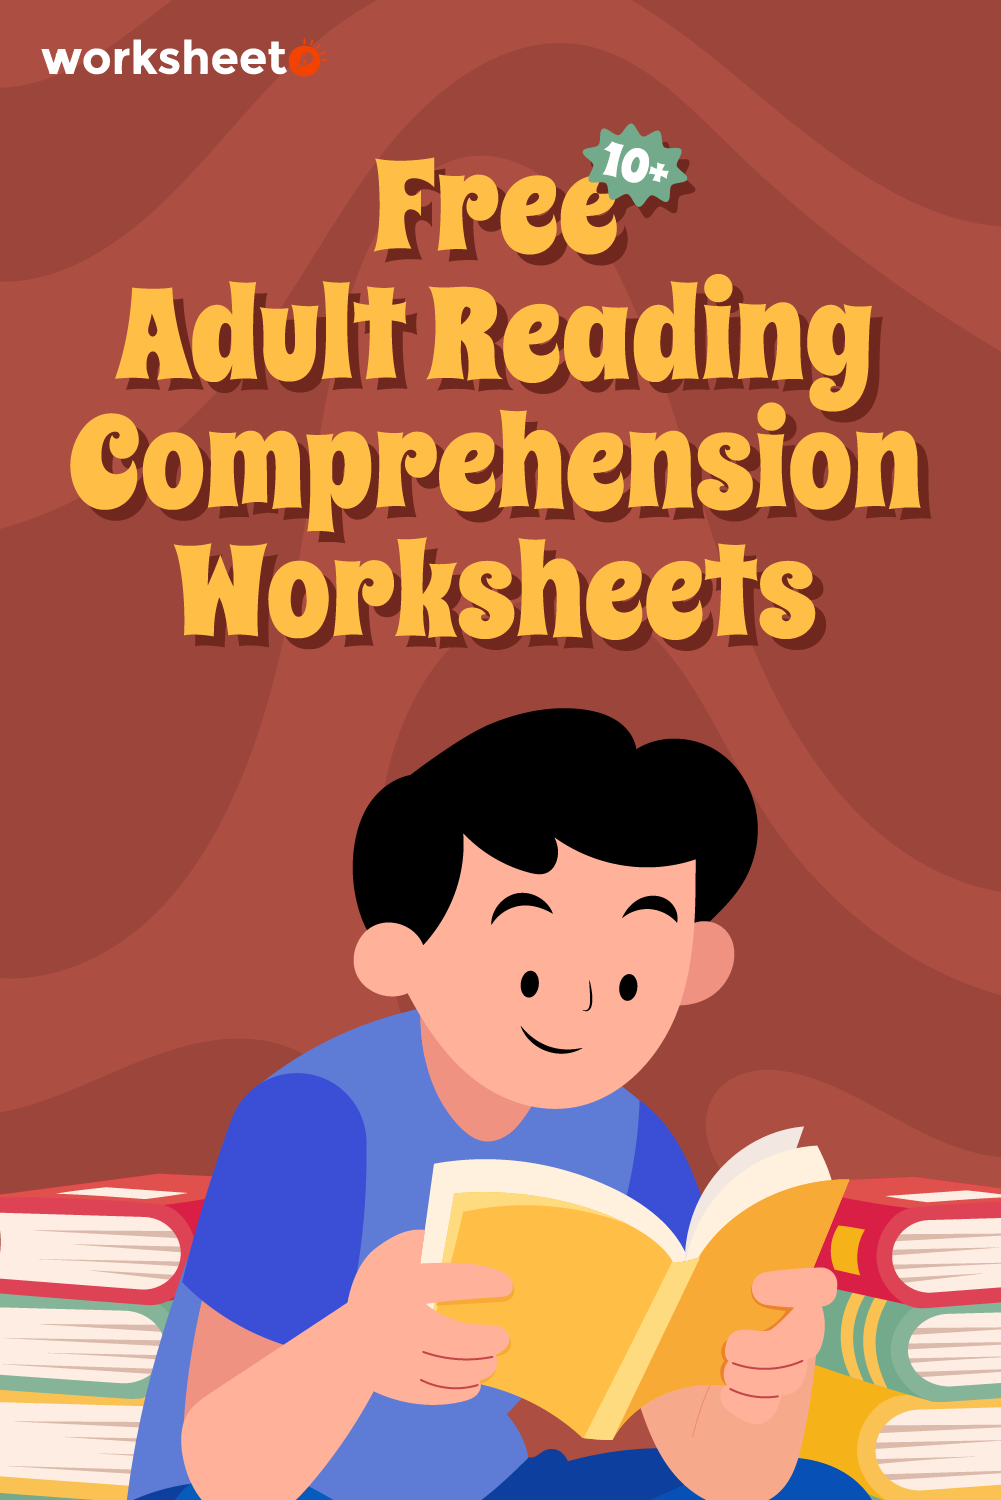 Free Adult Reading Comprehension Worksheets